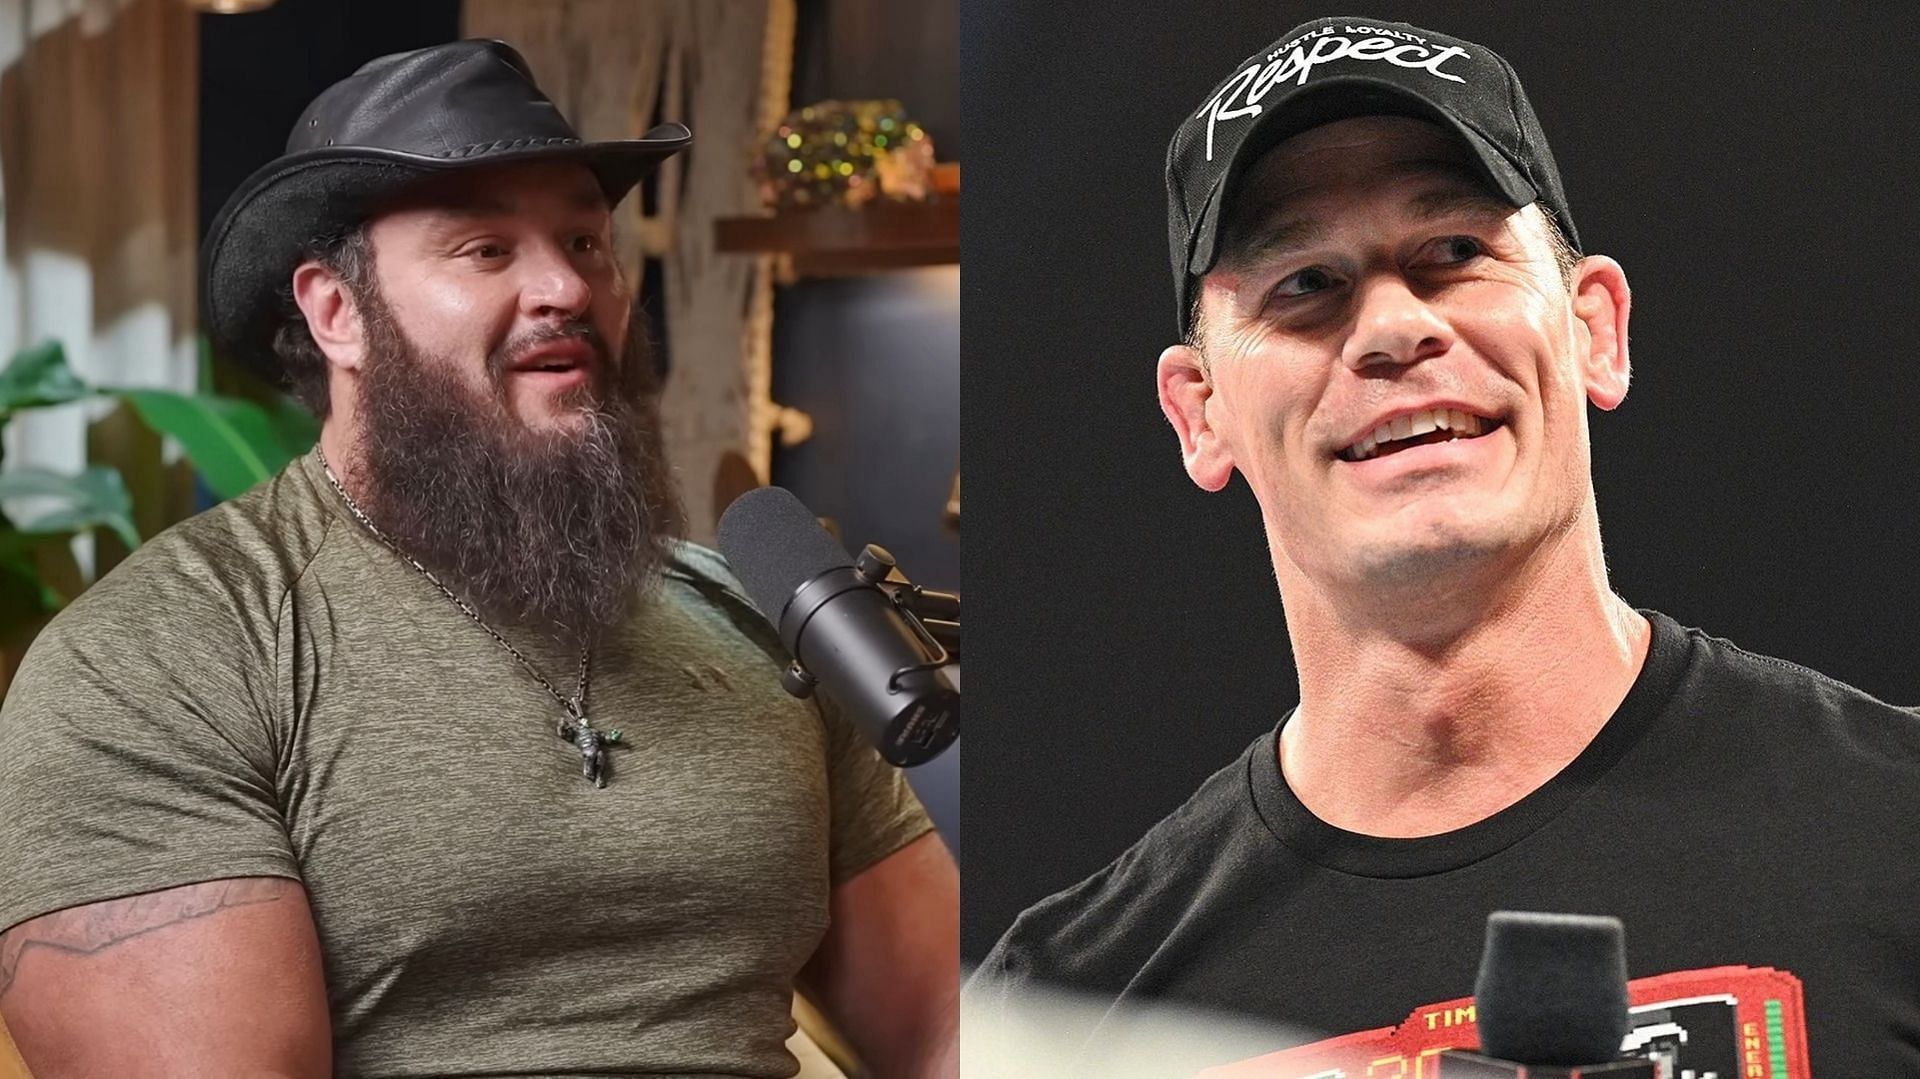 Braun Strowman and John Cena